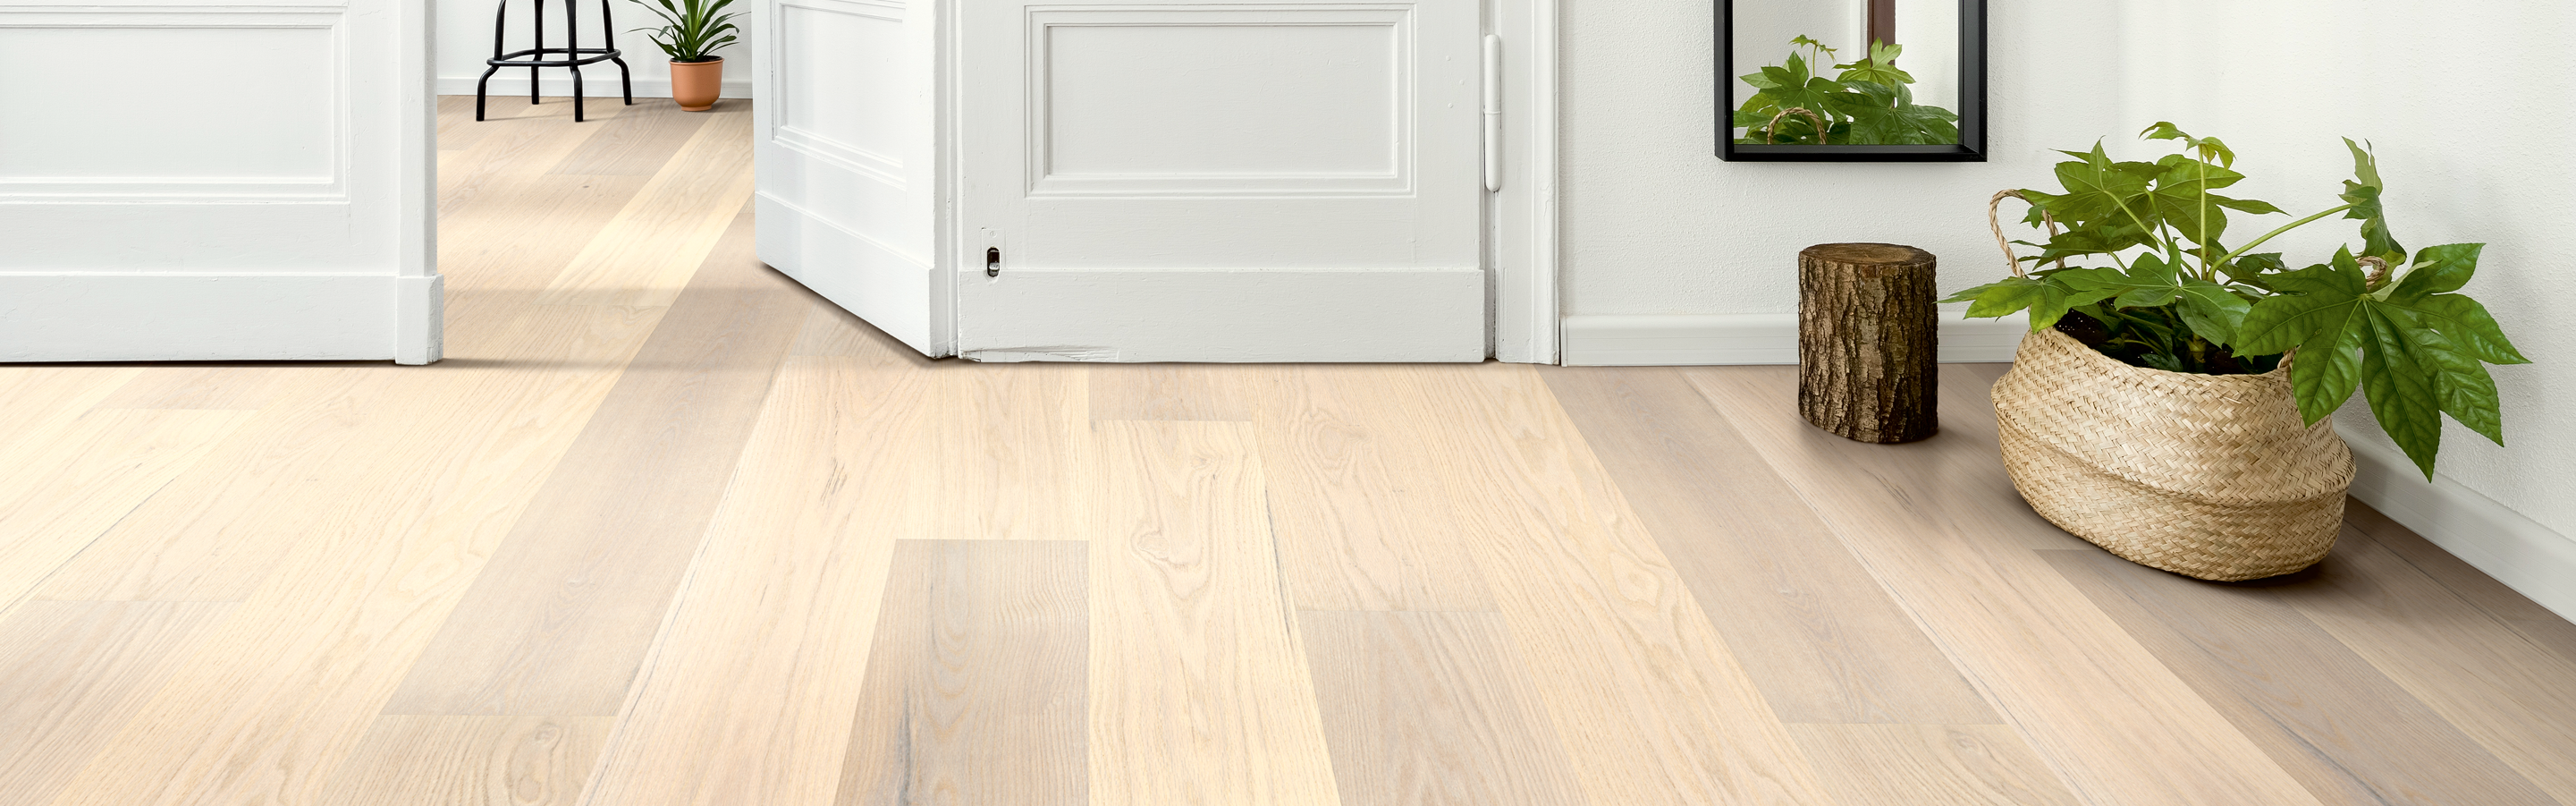 light toned hardwood flooring in entryway